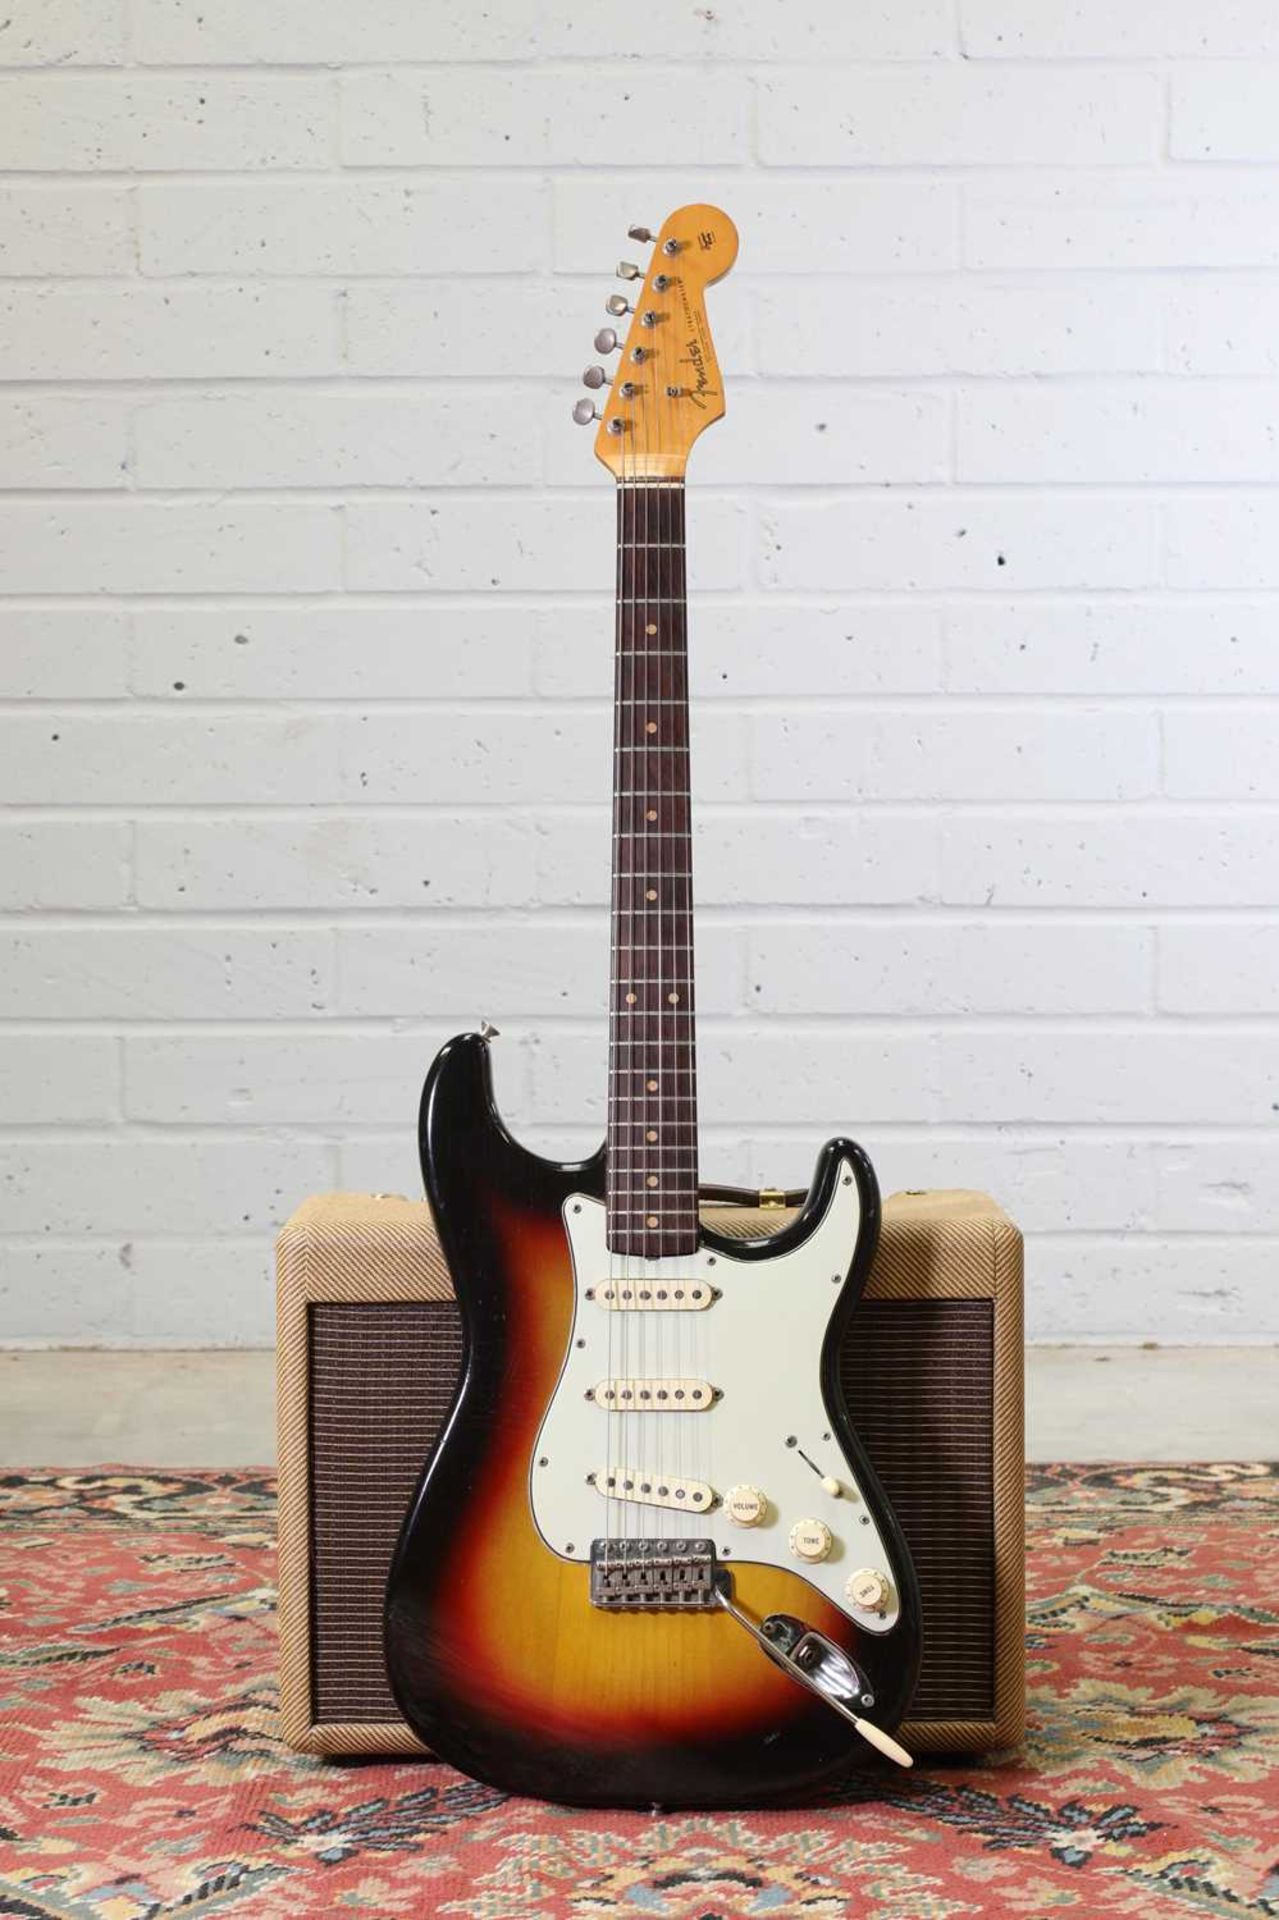 A 1963 Fender Stratocaster electric guitar,